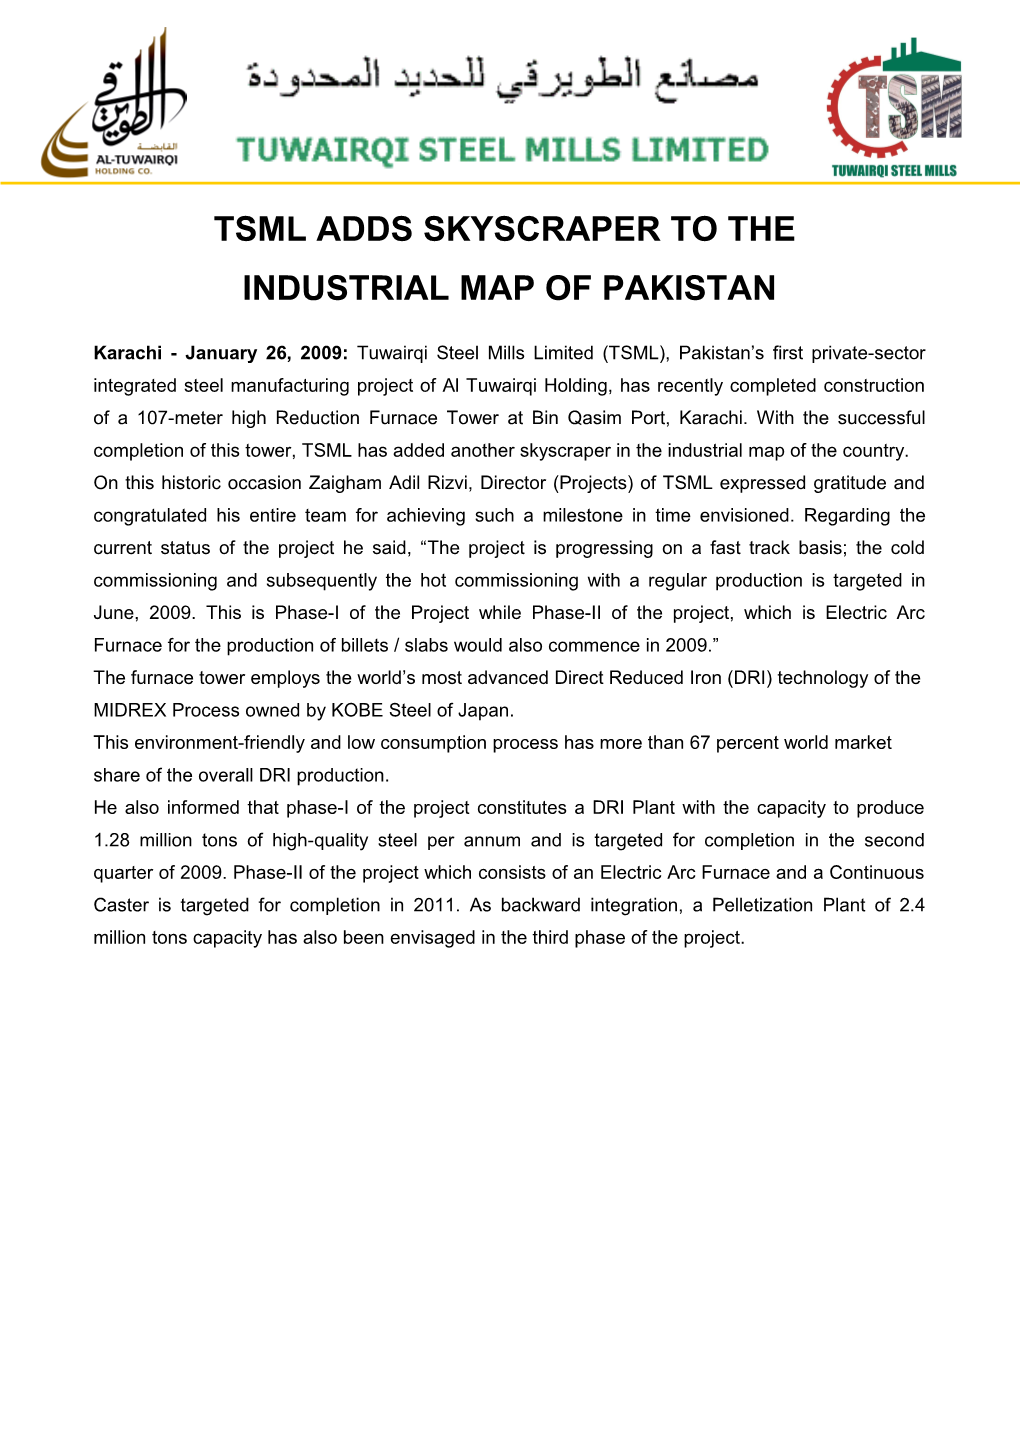 TSML Adds Skyscraper in the Industrial Map of Pakistan